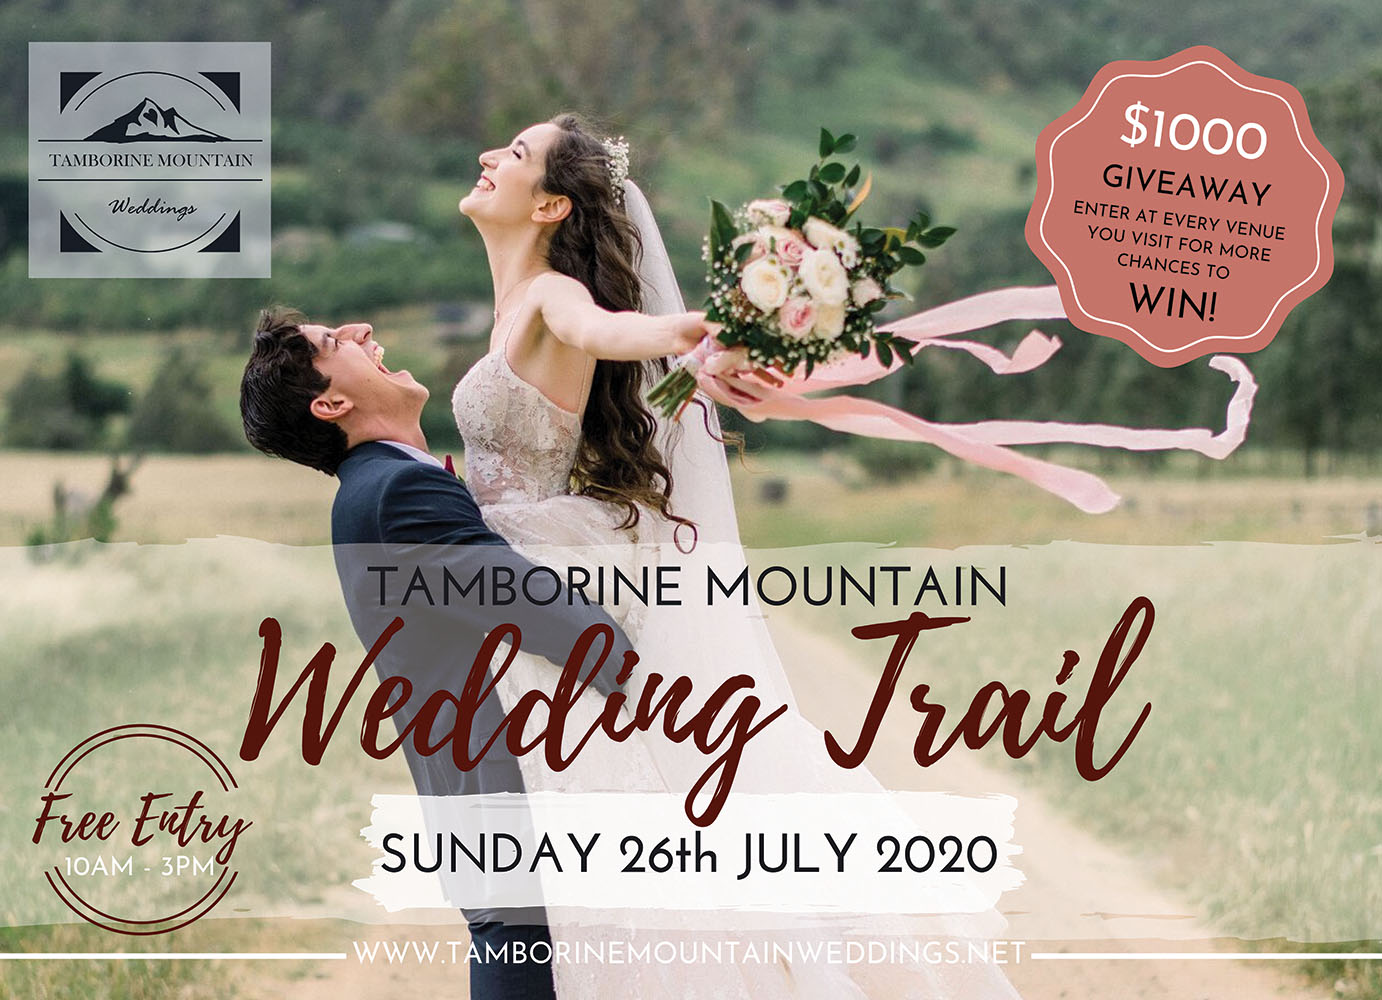 Tamborine Mountain Wedding Trail 26 July